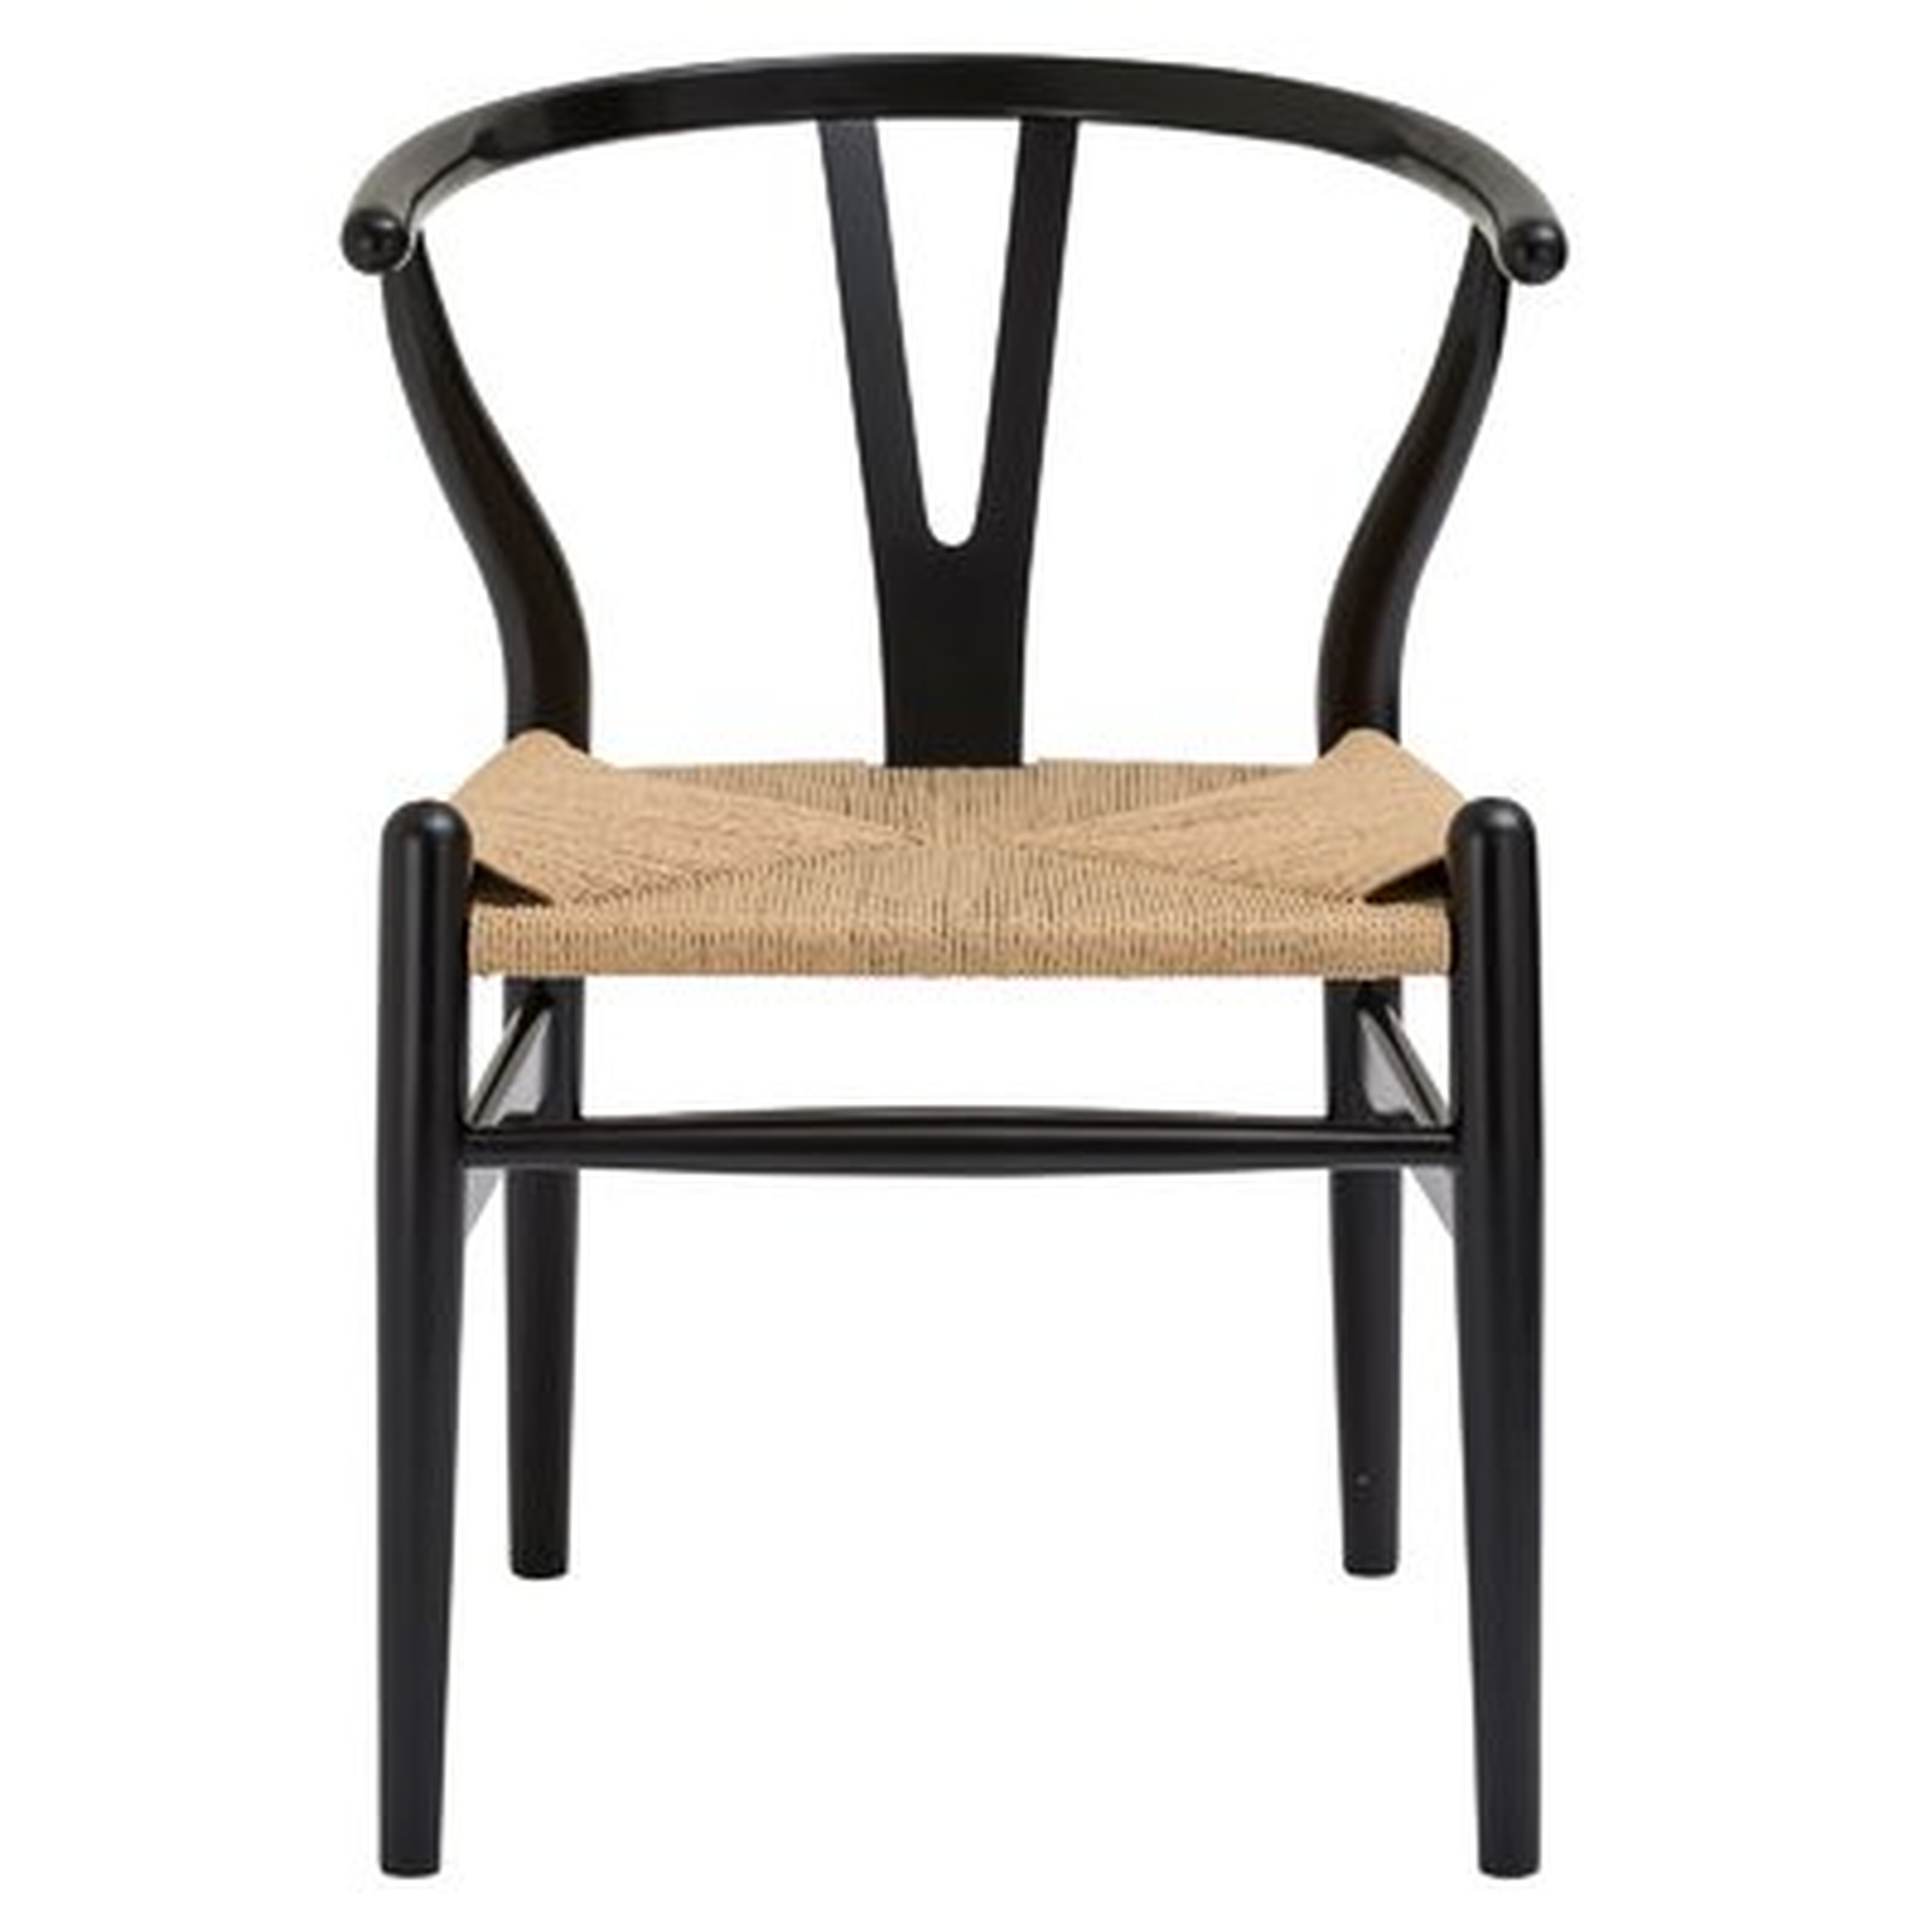 Dayanara Solid Wood Dining Chair - Wayfair